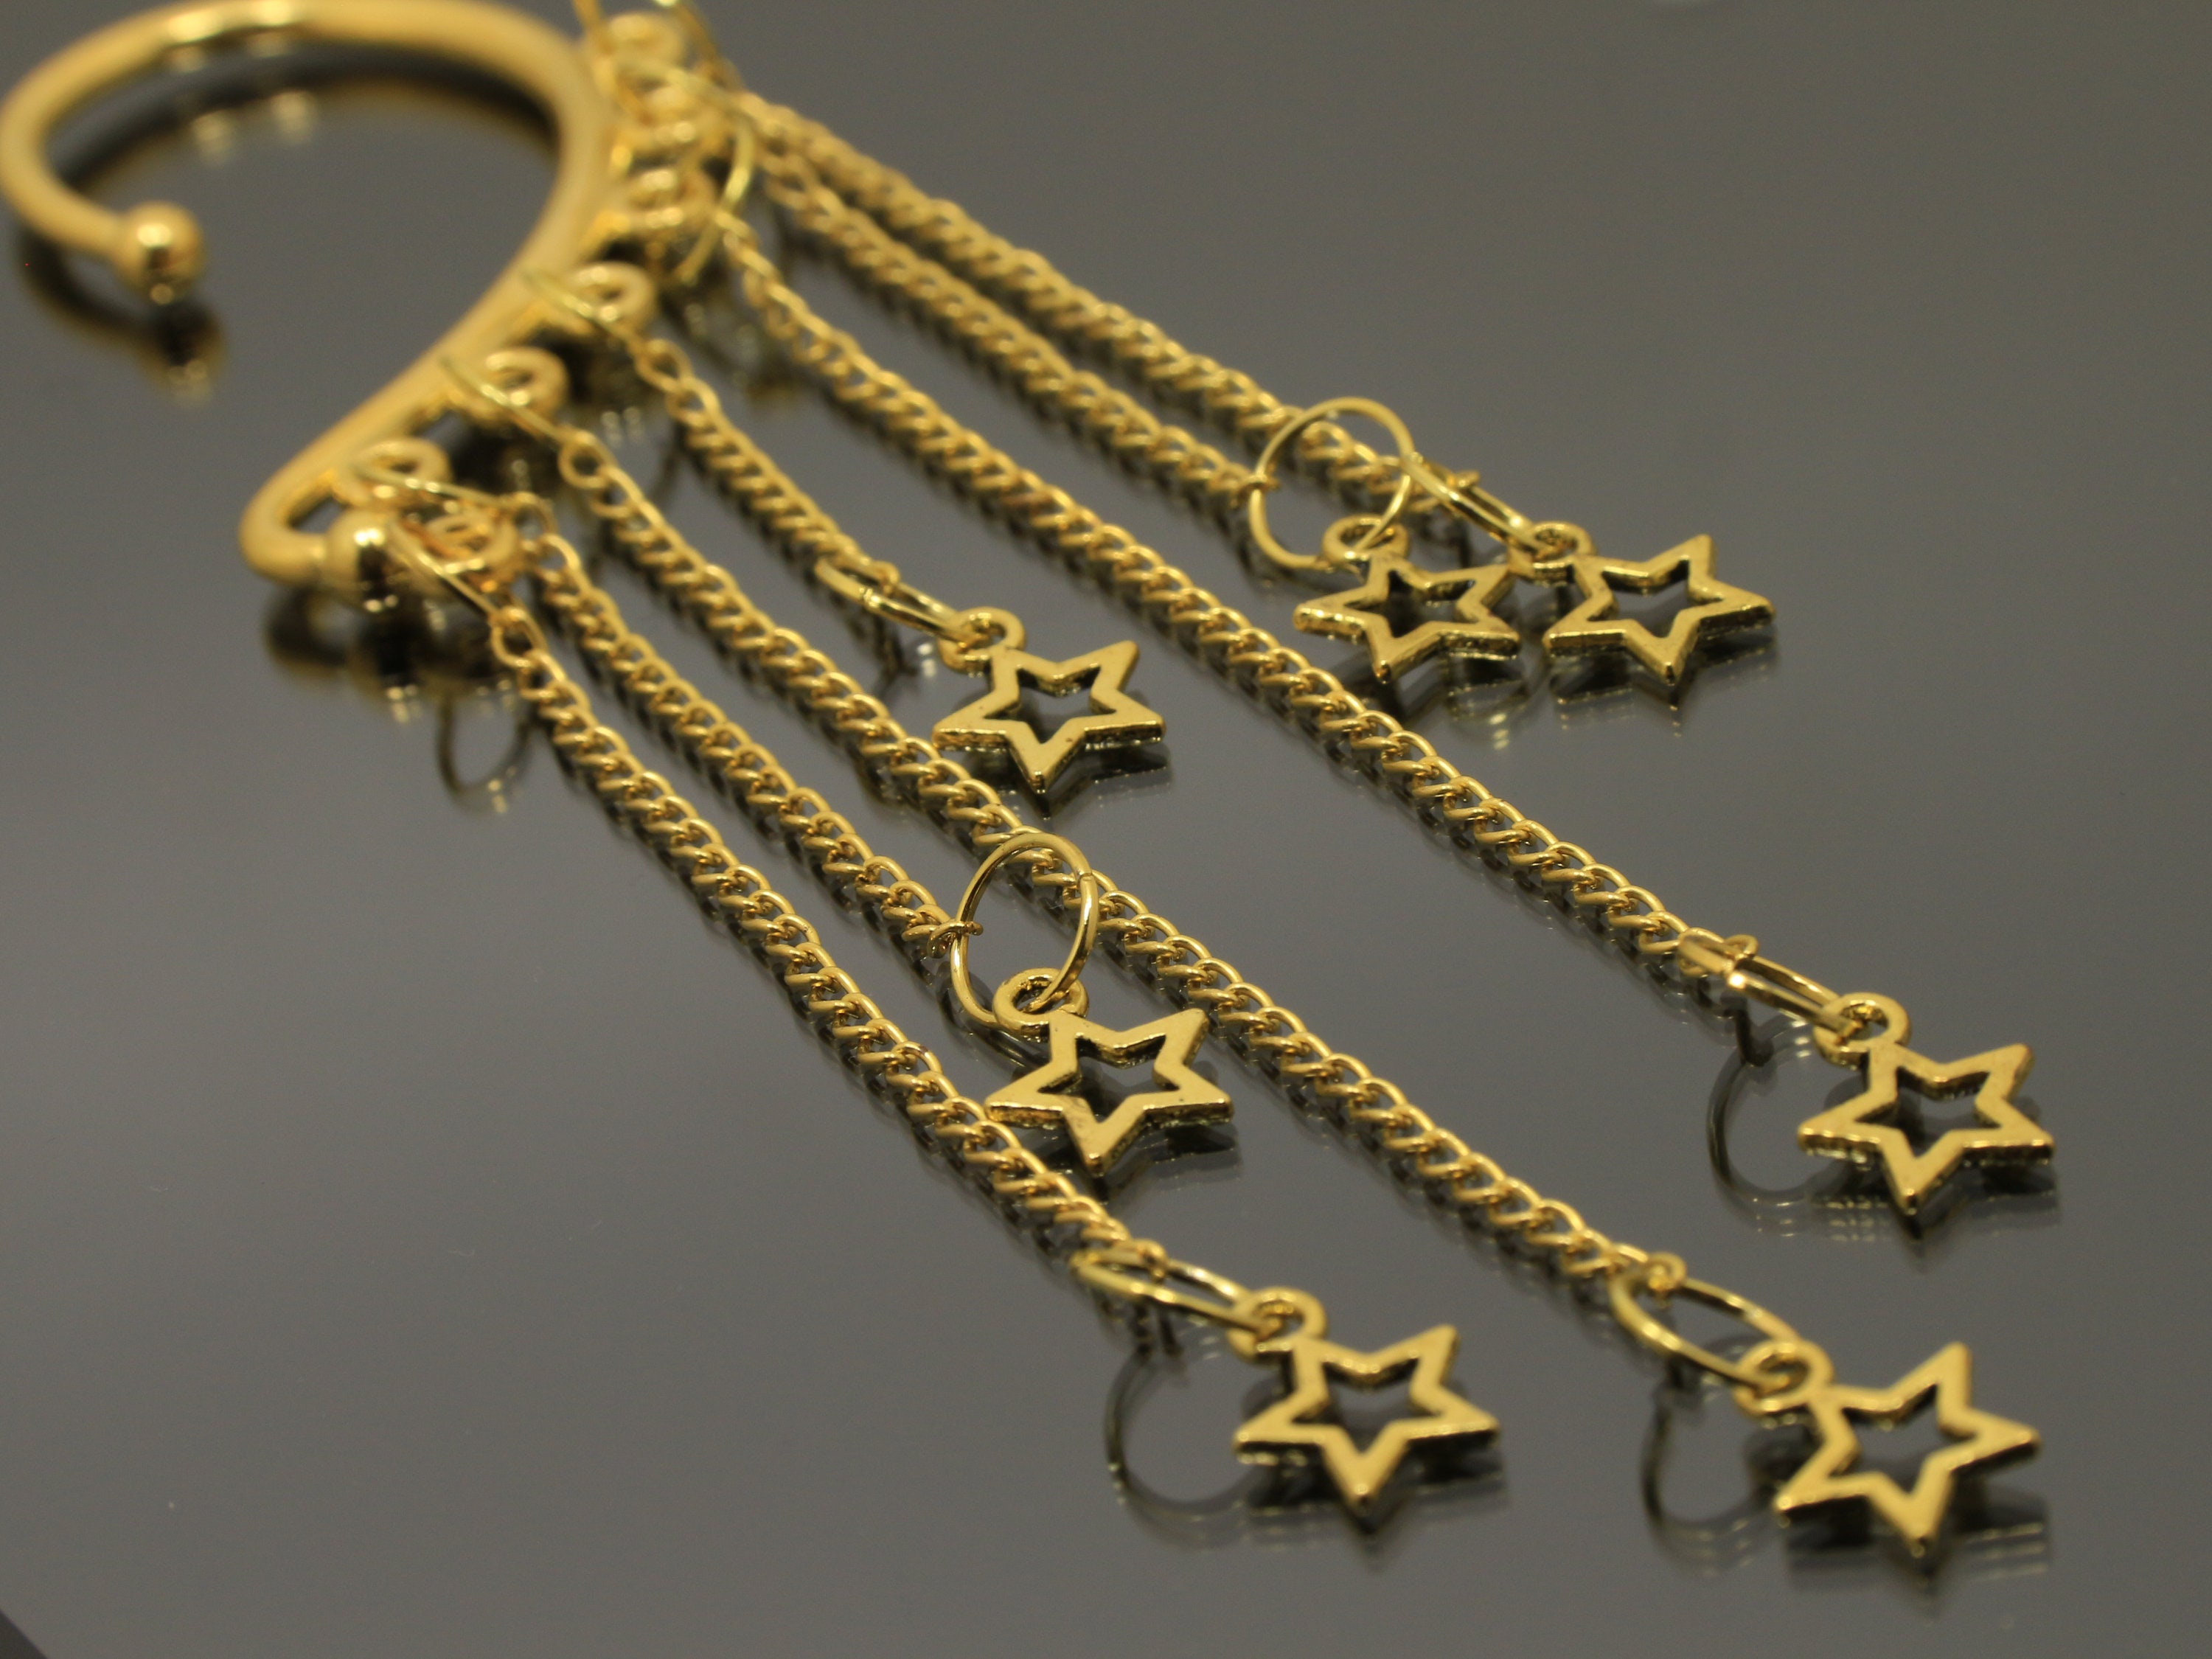 Gold Star Ear Cuff Earring Celestial Long Chain Jewelry Non 